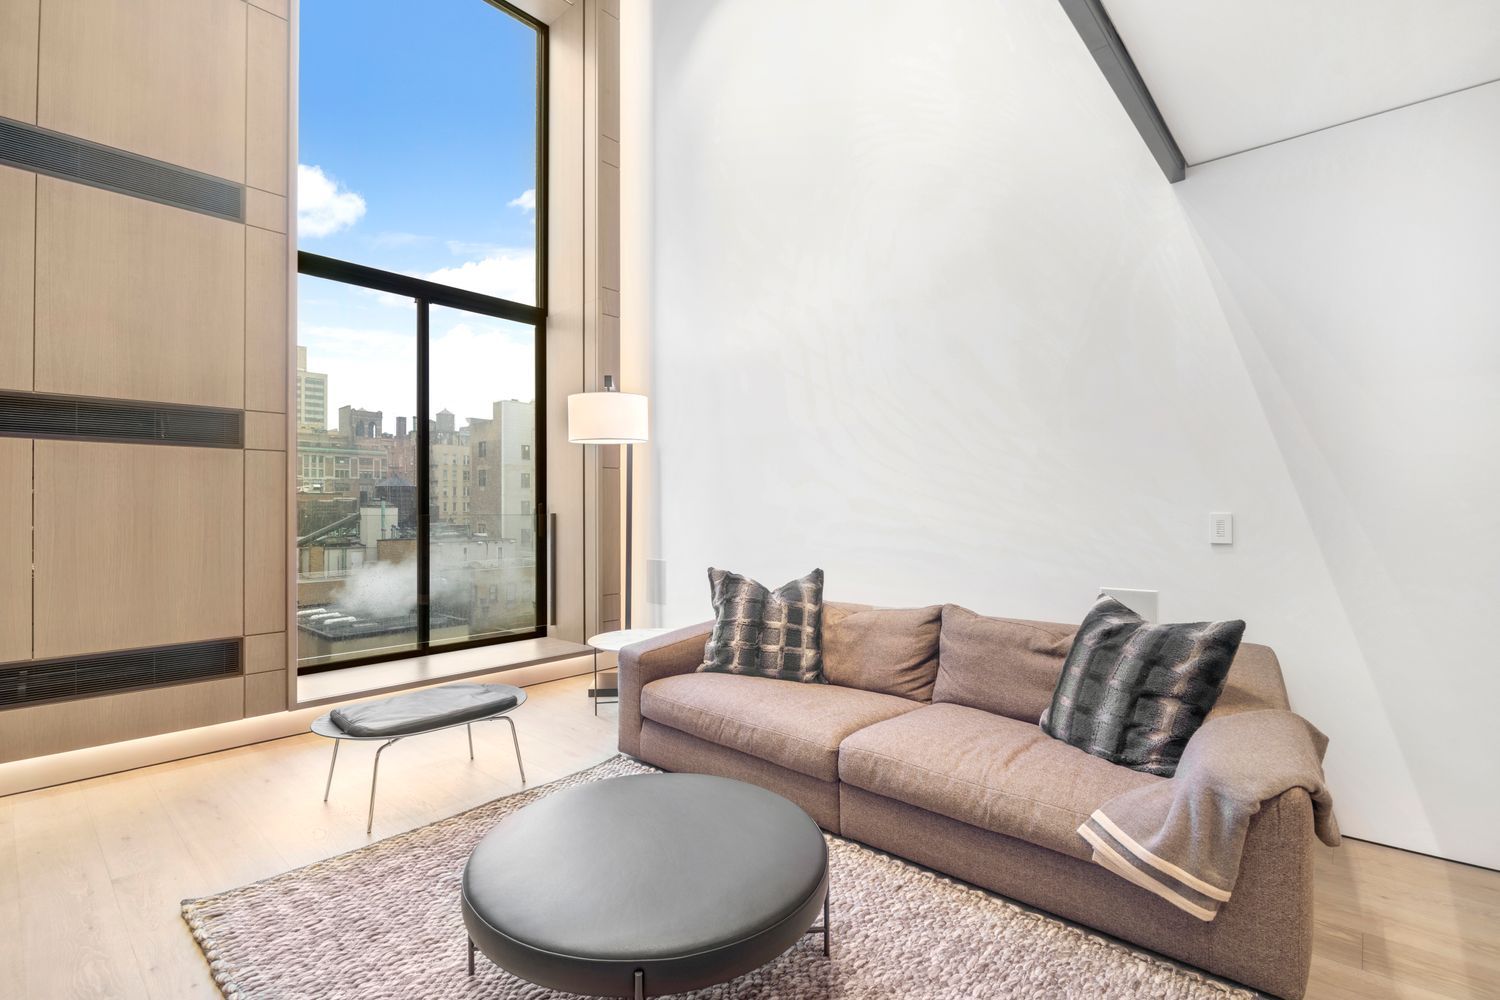 Upper East Side, Manhattan, NY Real Estate & Homes For Sale